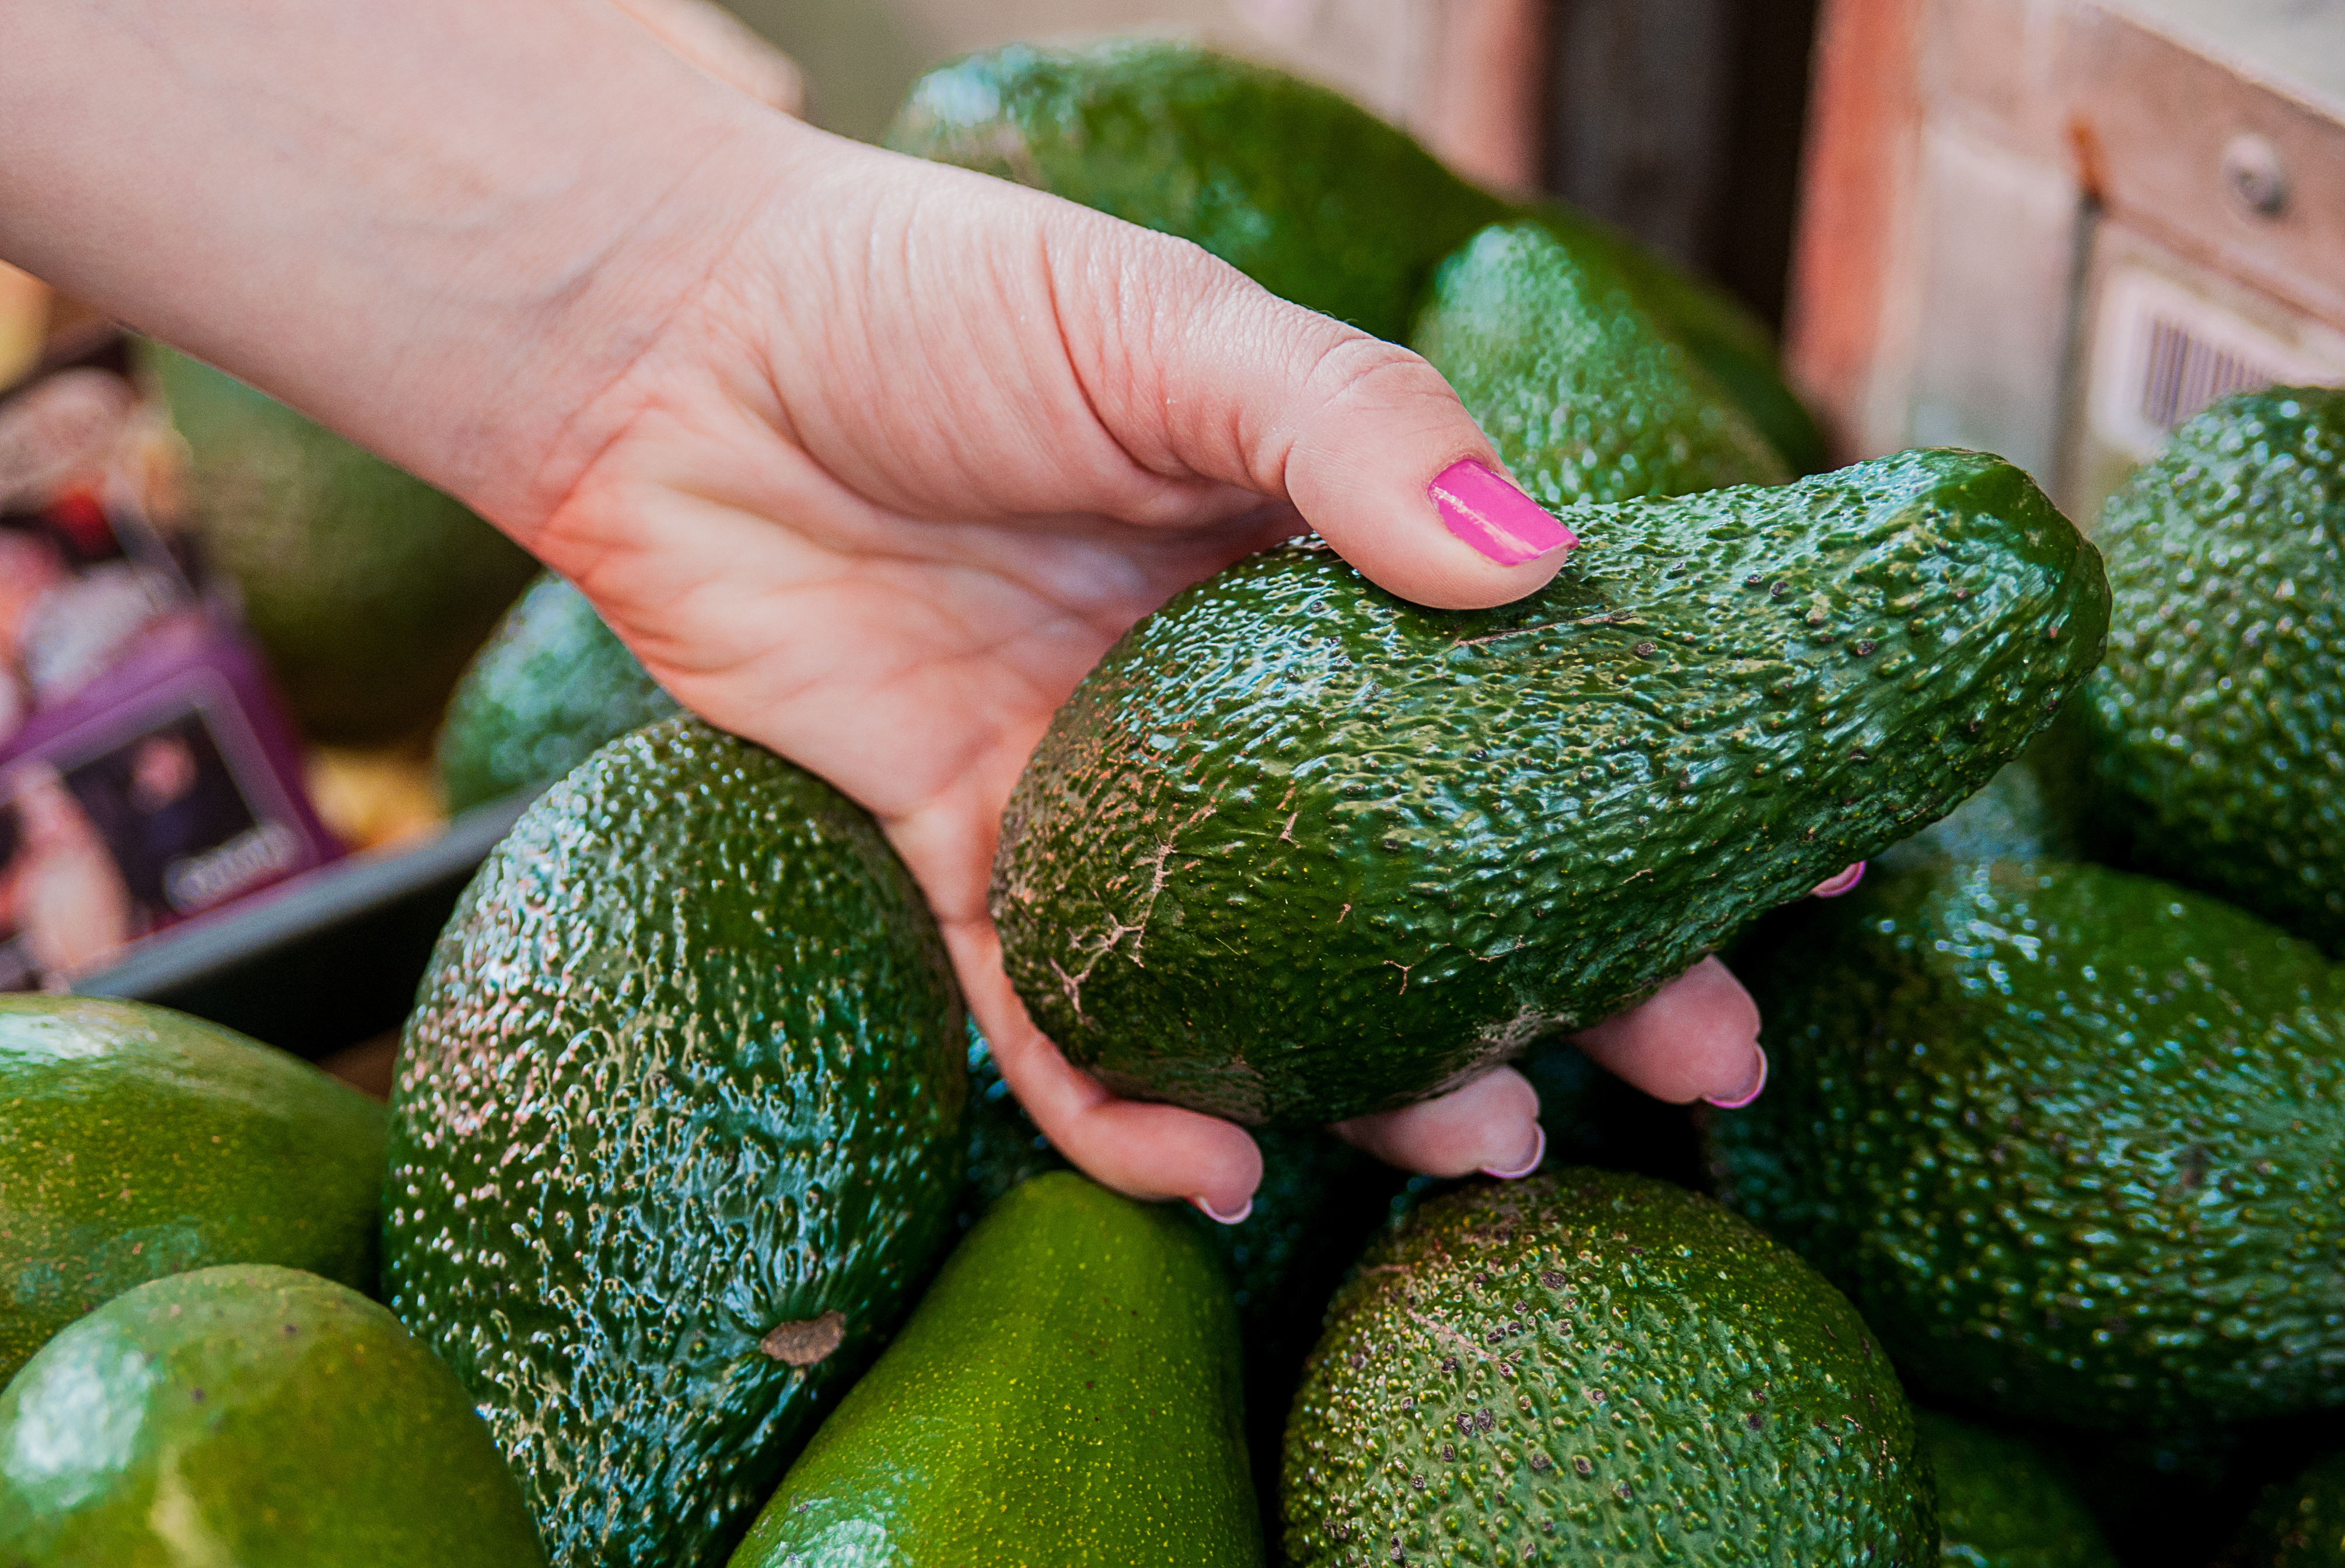 How to pick avocado